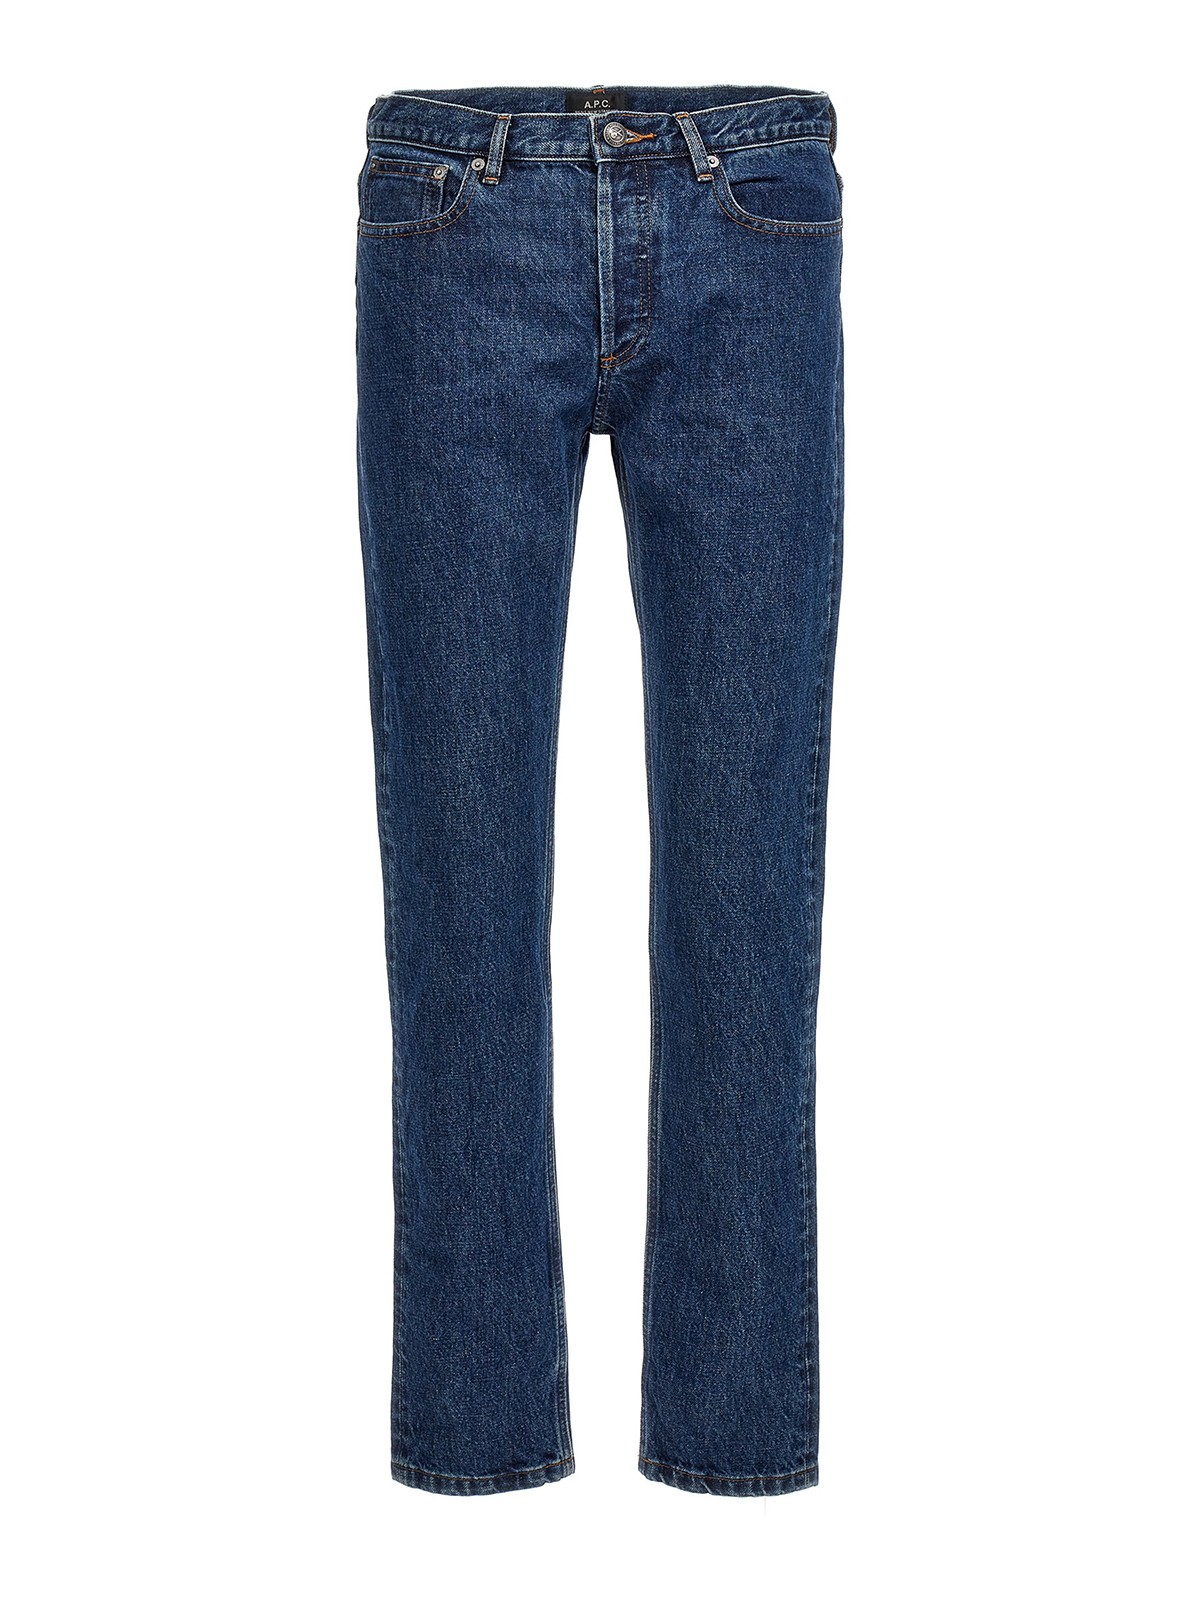 Apc Jeans Petit New Standard In Blue